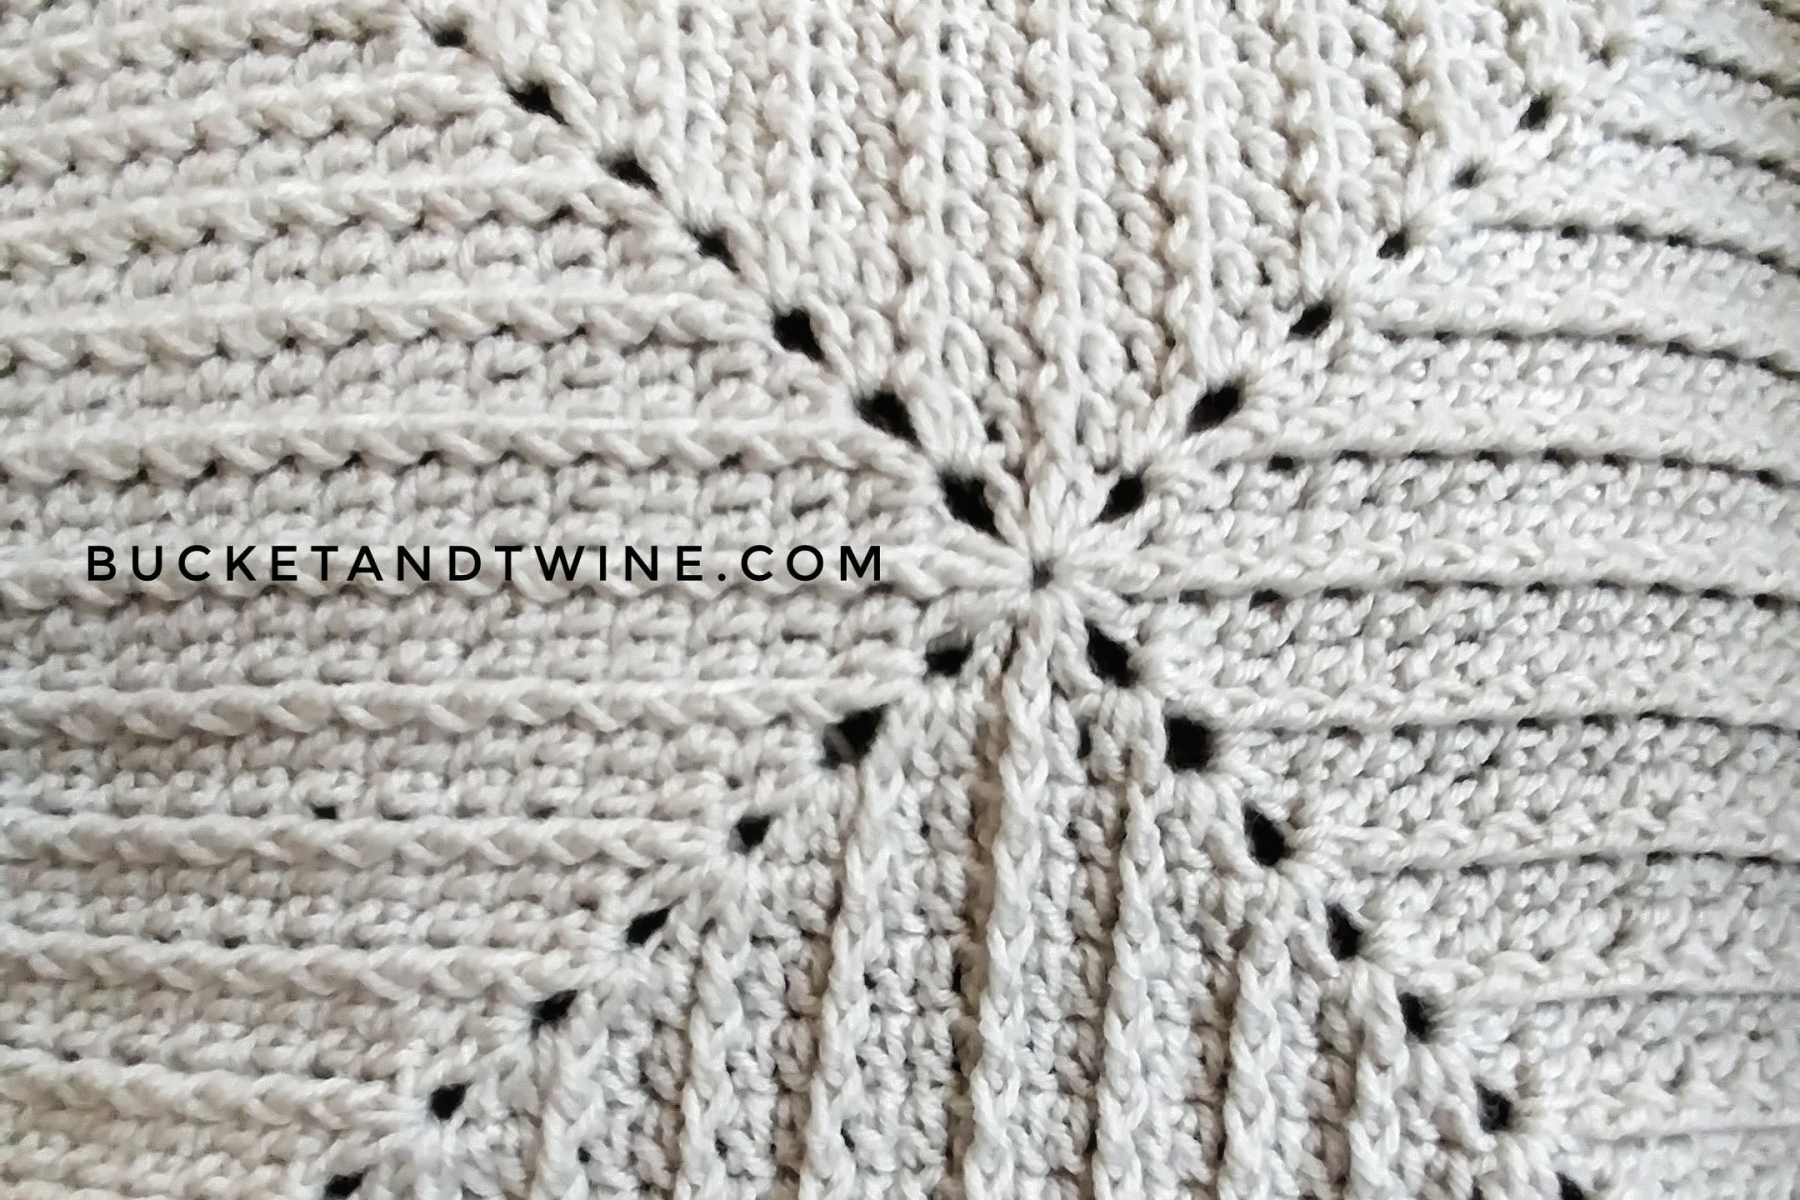 Granny square ridges front post double crochet